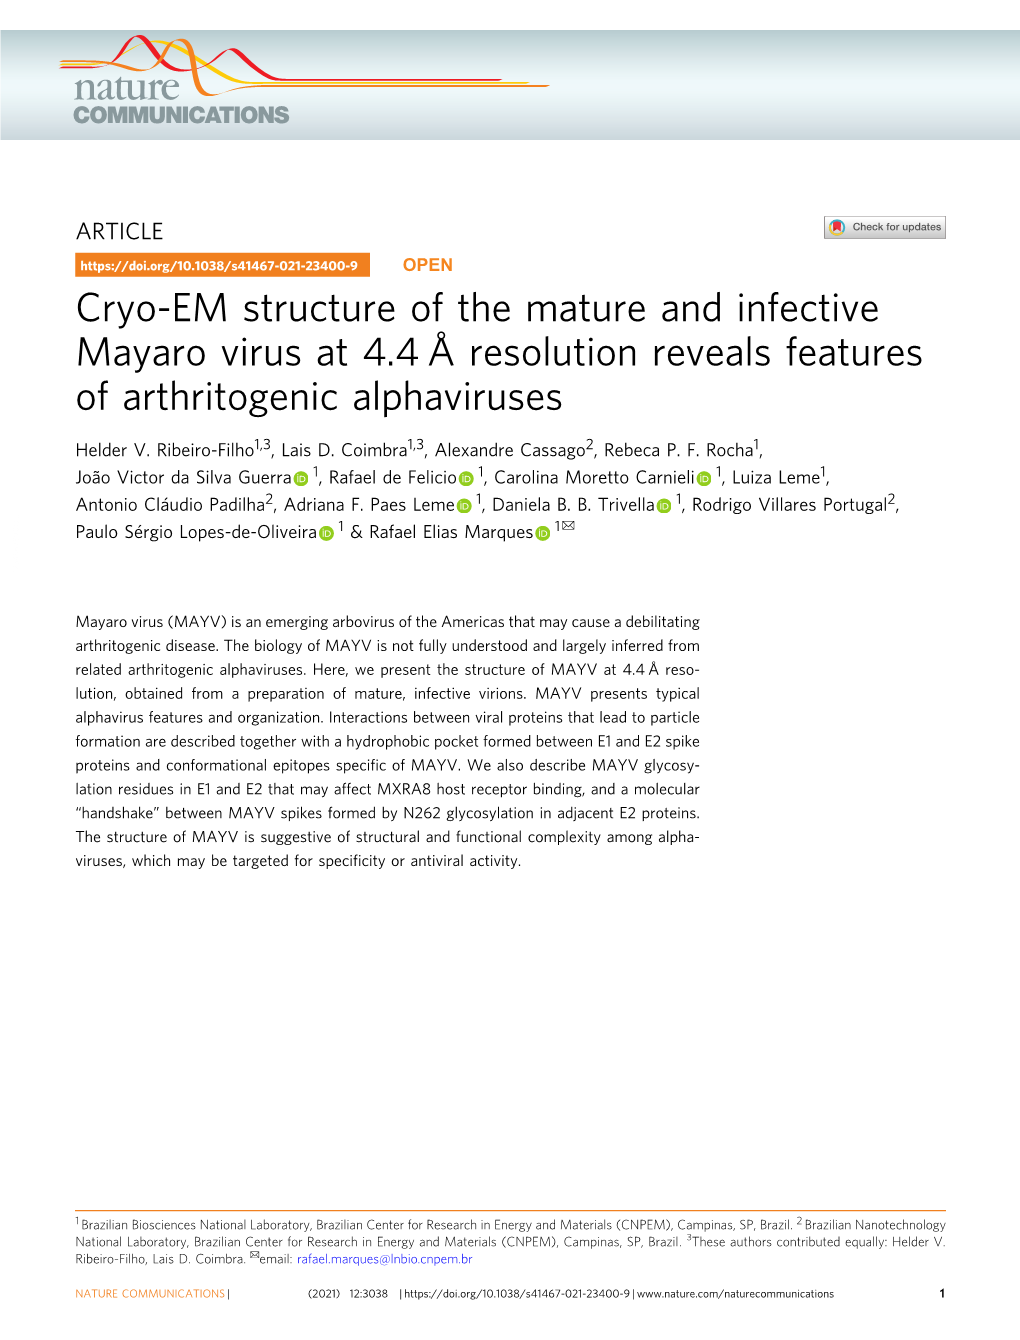 Cryo-EM Structure of the Mature and Infective Mayaro Virus at 4.4 Å Resolution Reveals Features of Arthritogenic Alphaviruses